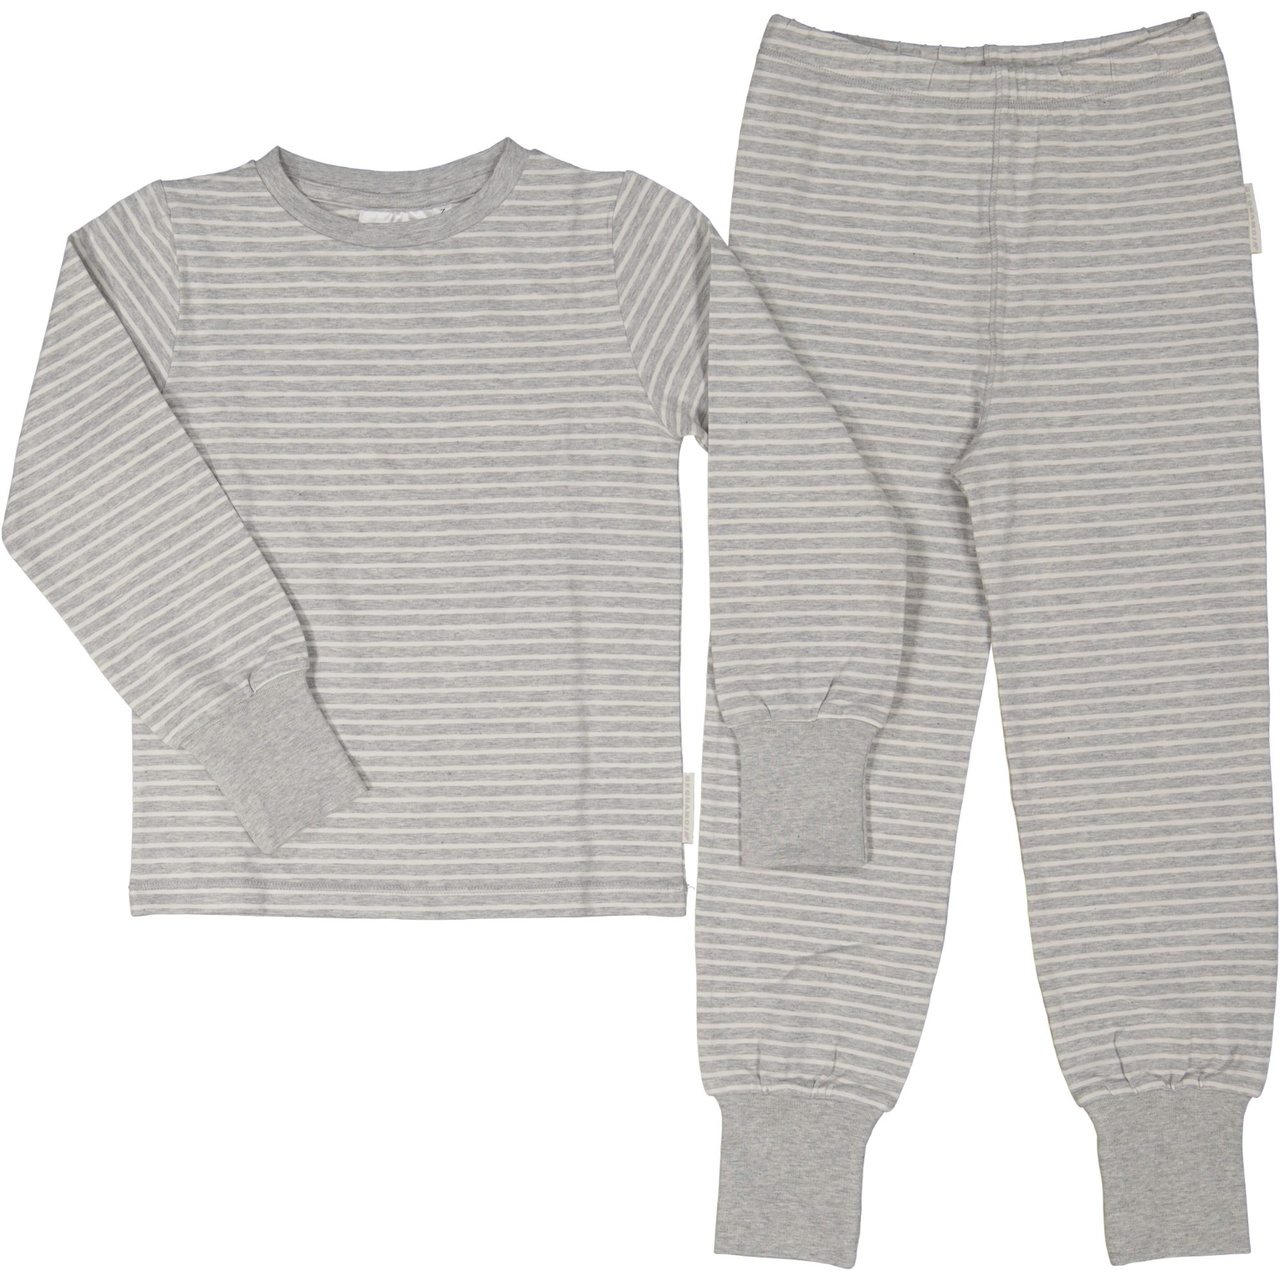 Two pcs pyjamas Classic Grey mel/white 122/128